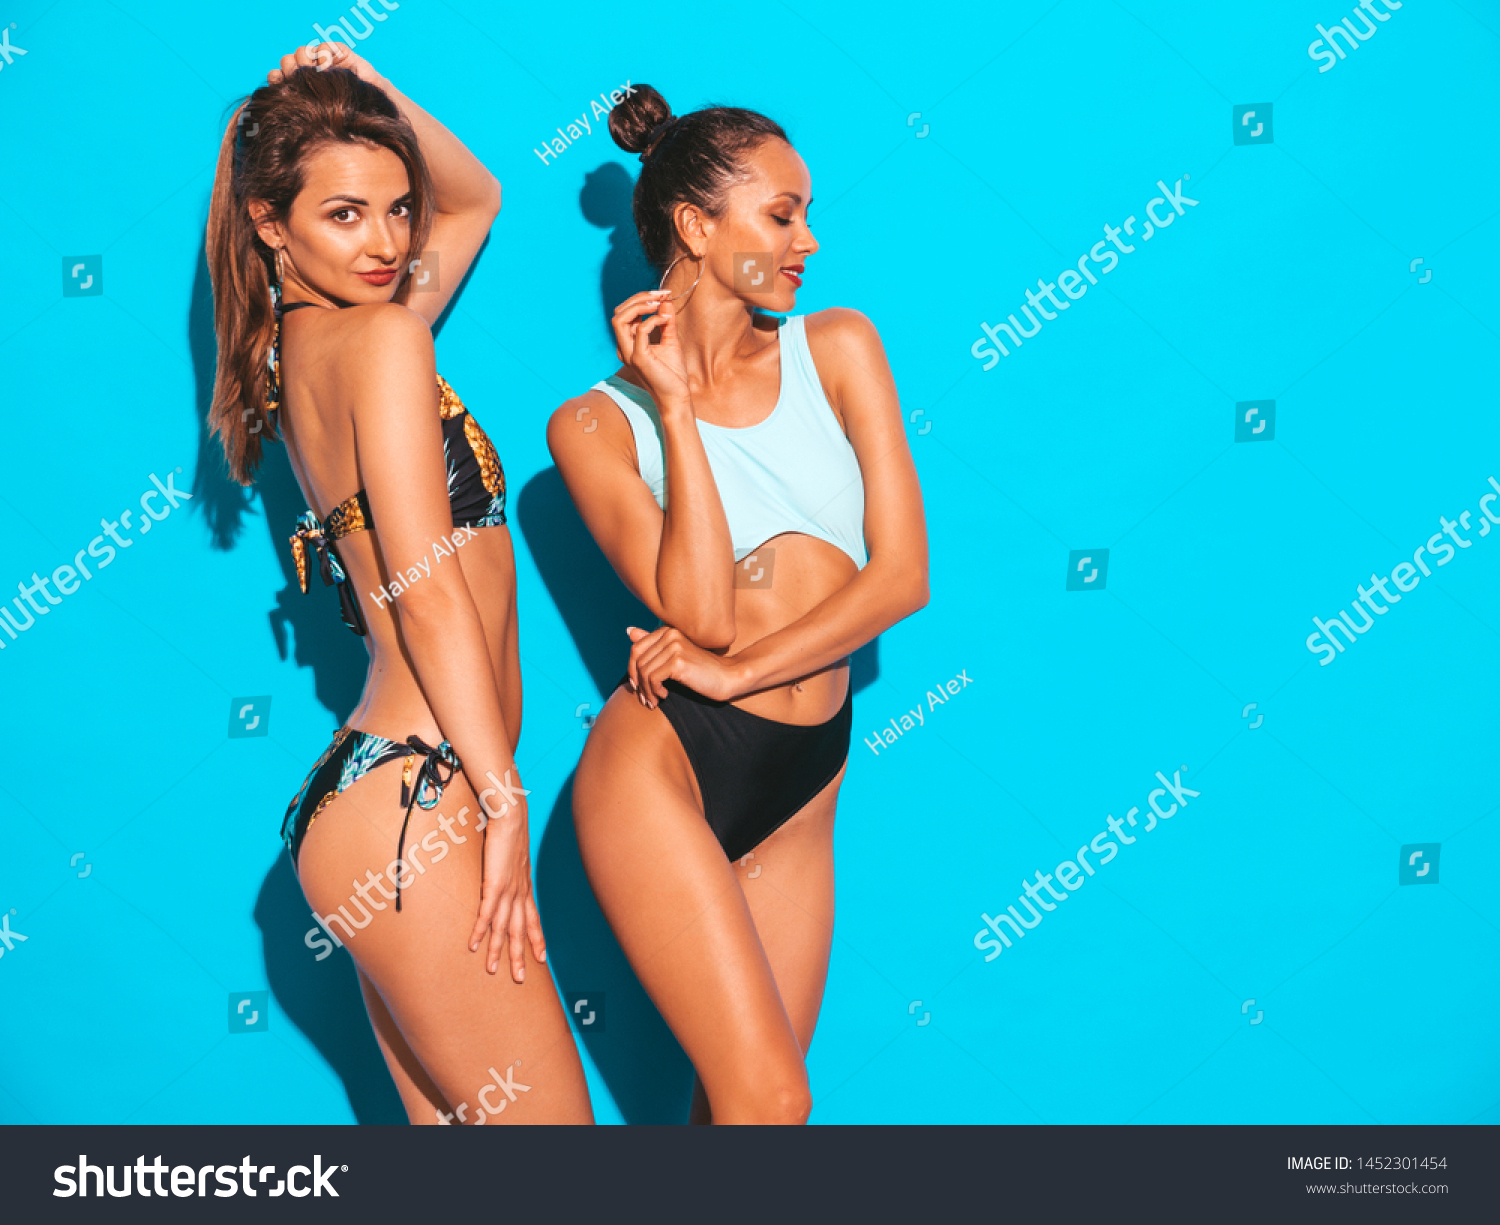 Две девушки в купальниках на фоне